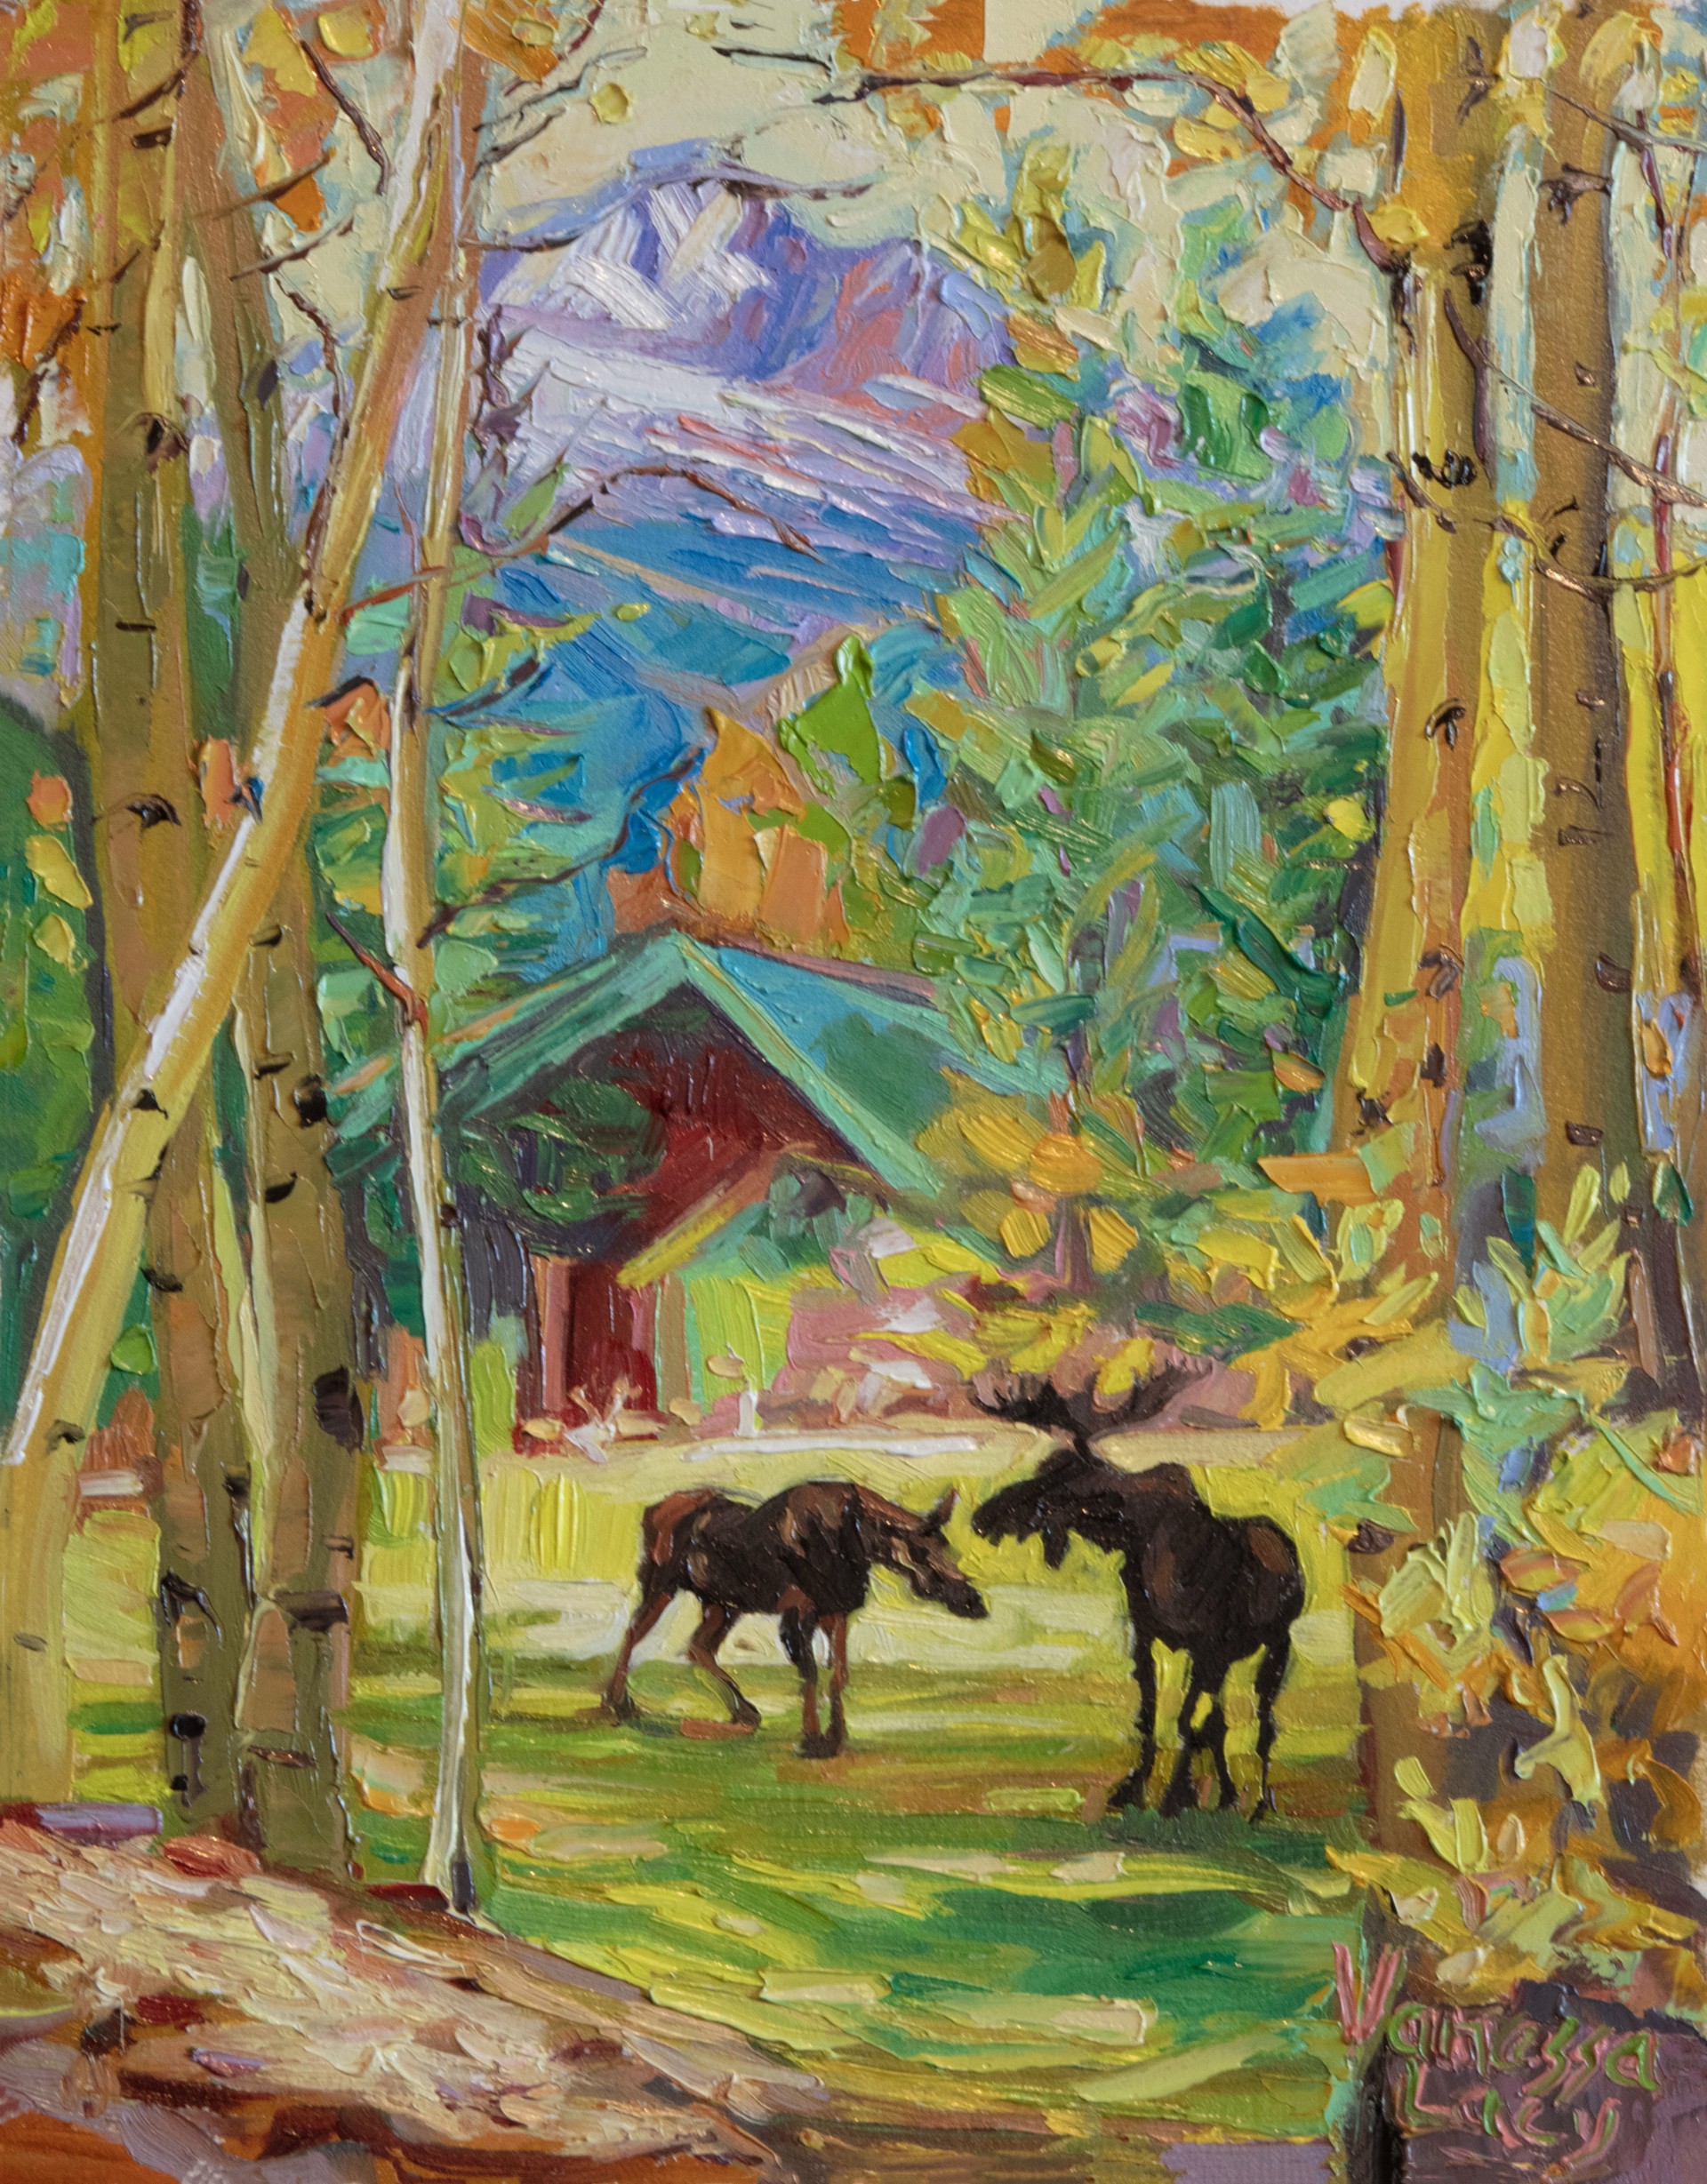 Aspen's Watchful Herd by Vanessa Lacy